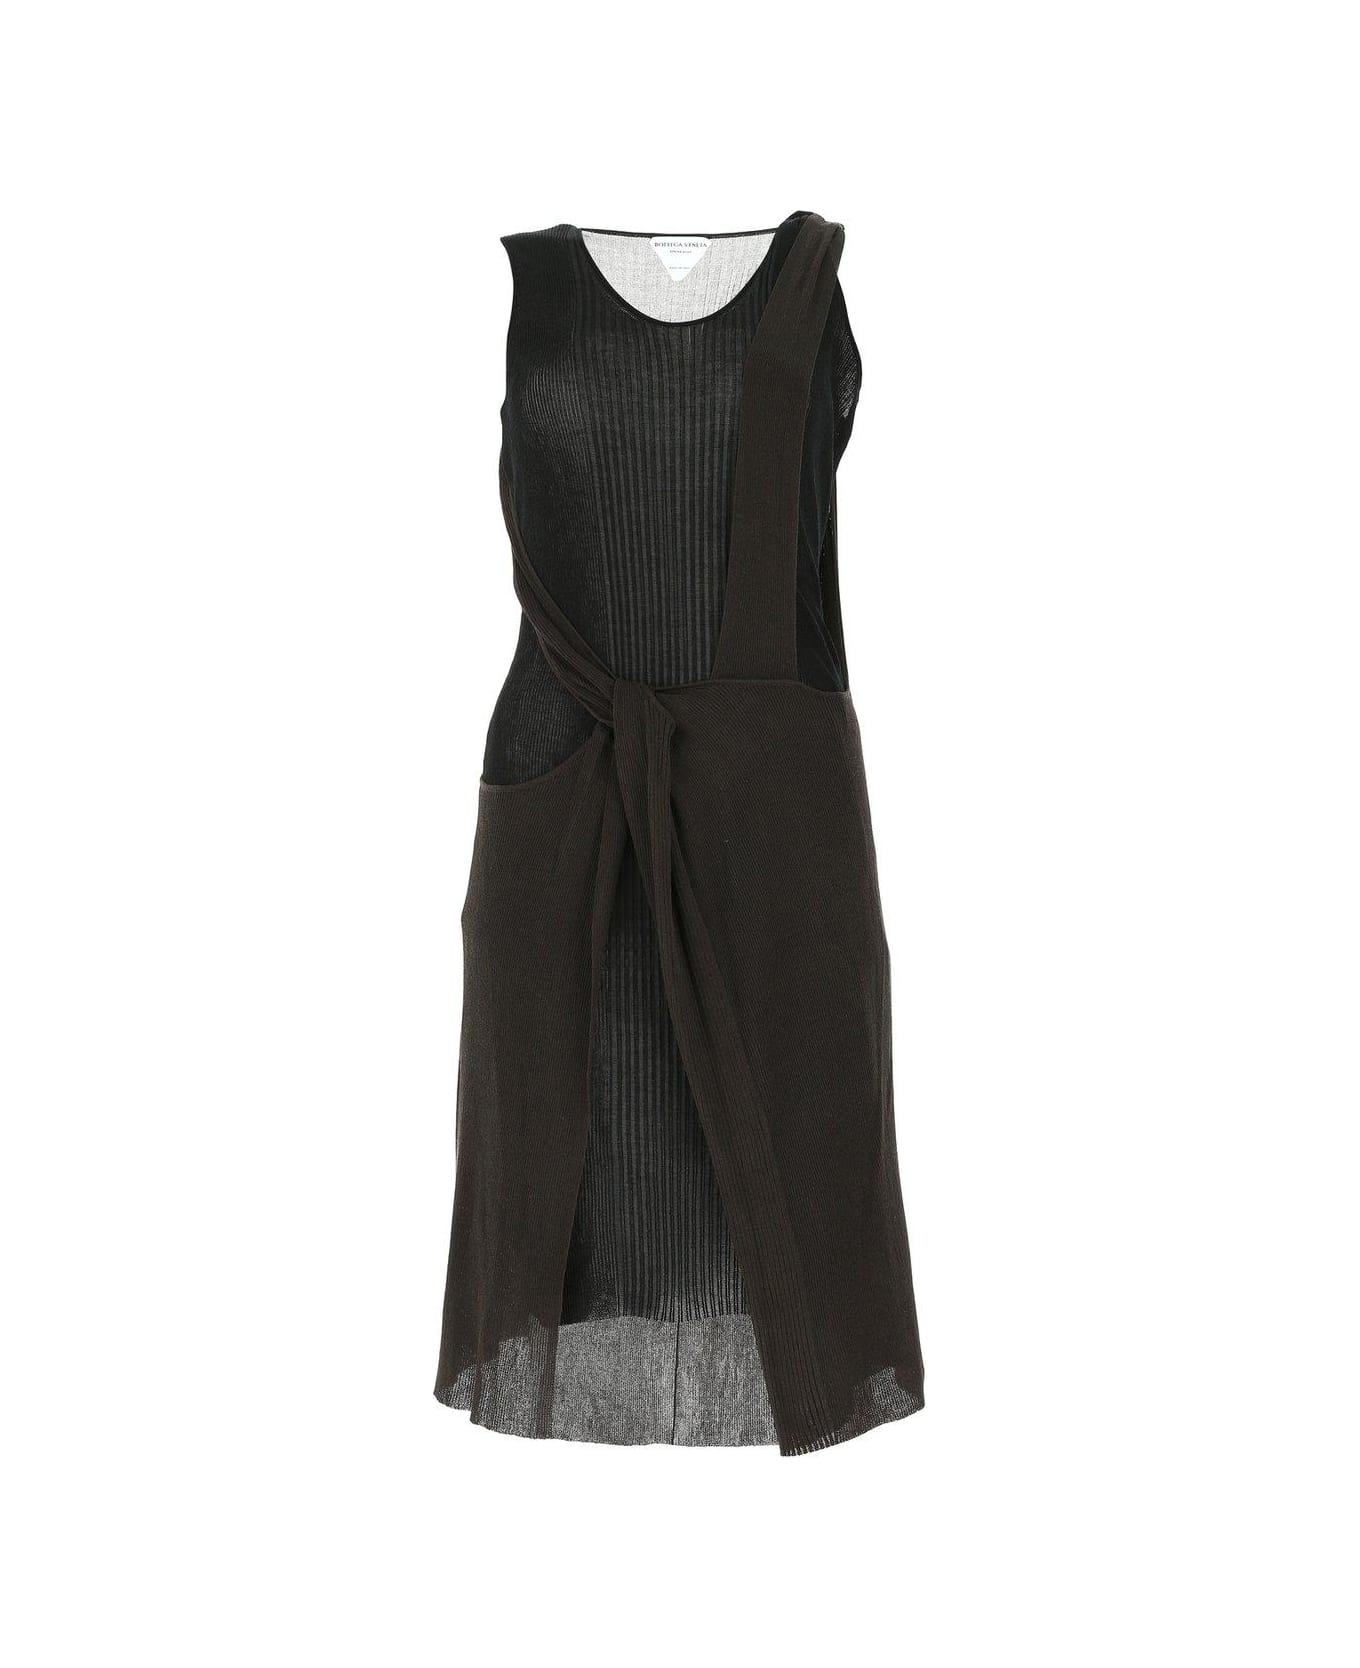 Bottega Veneta Cut-out Layered Knit Dress - BROWN